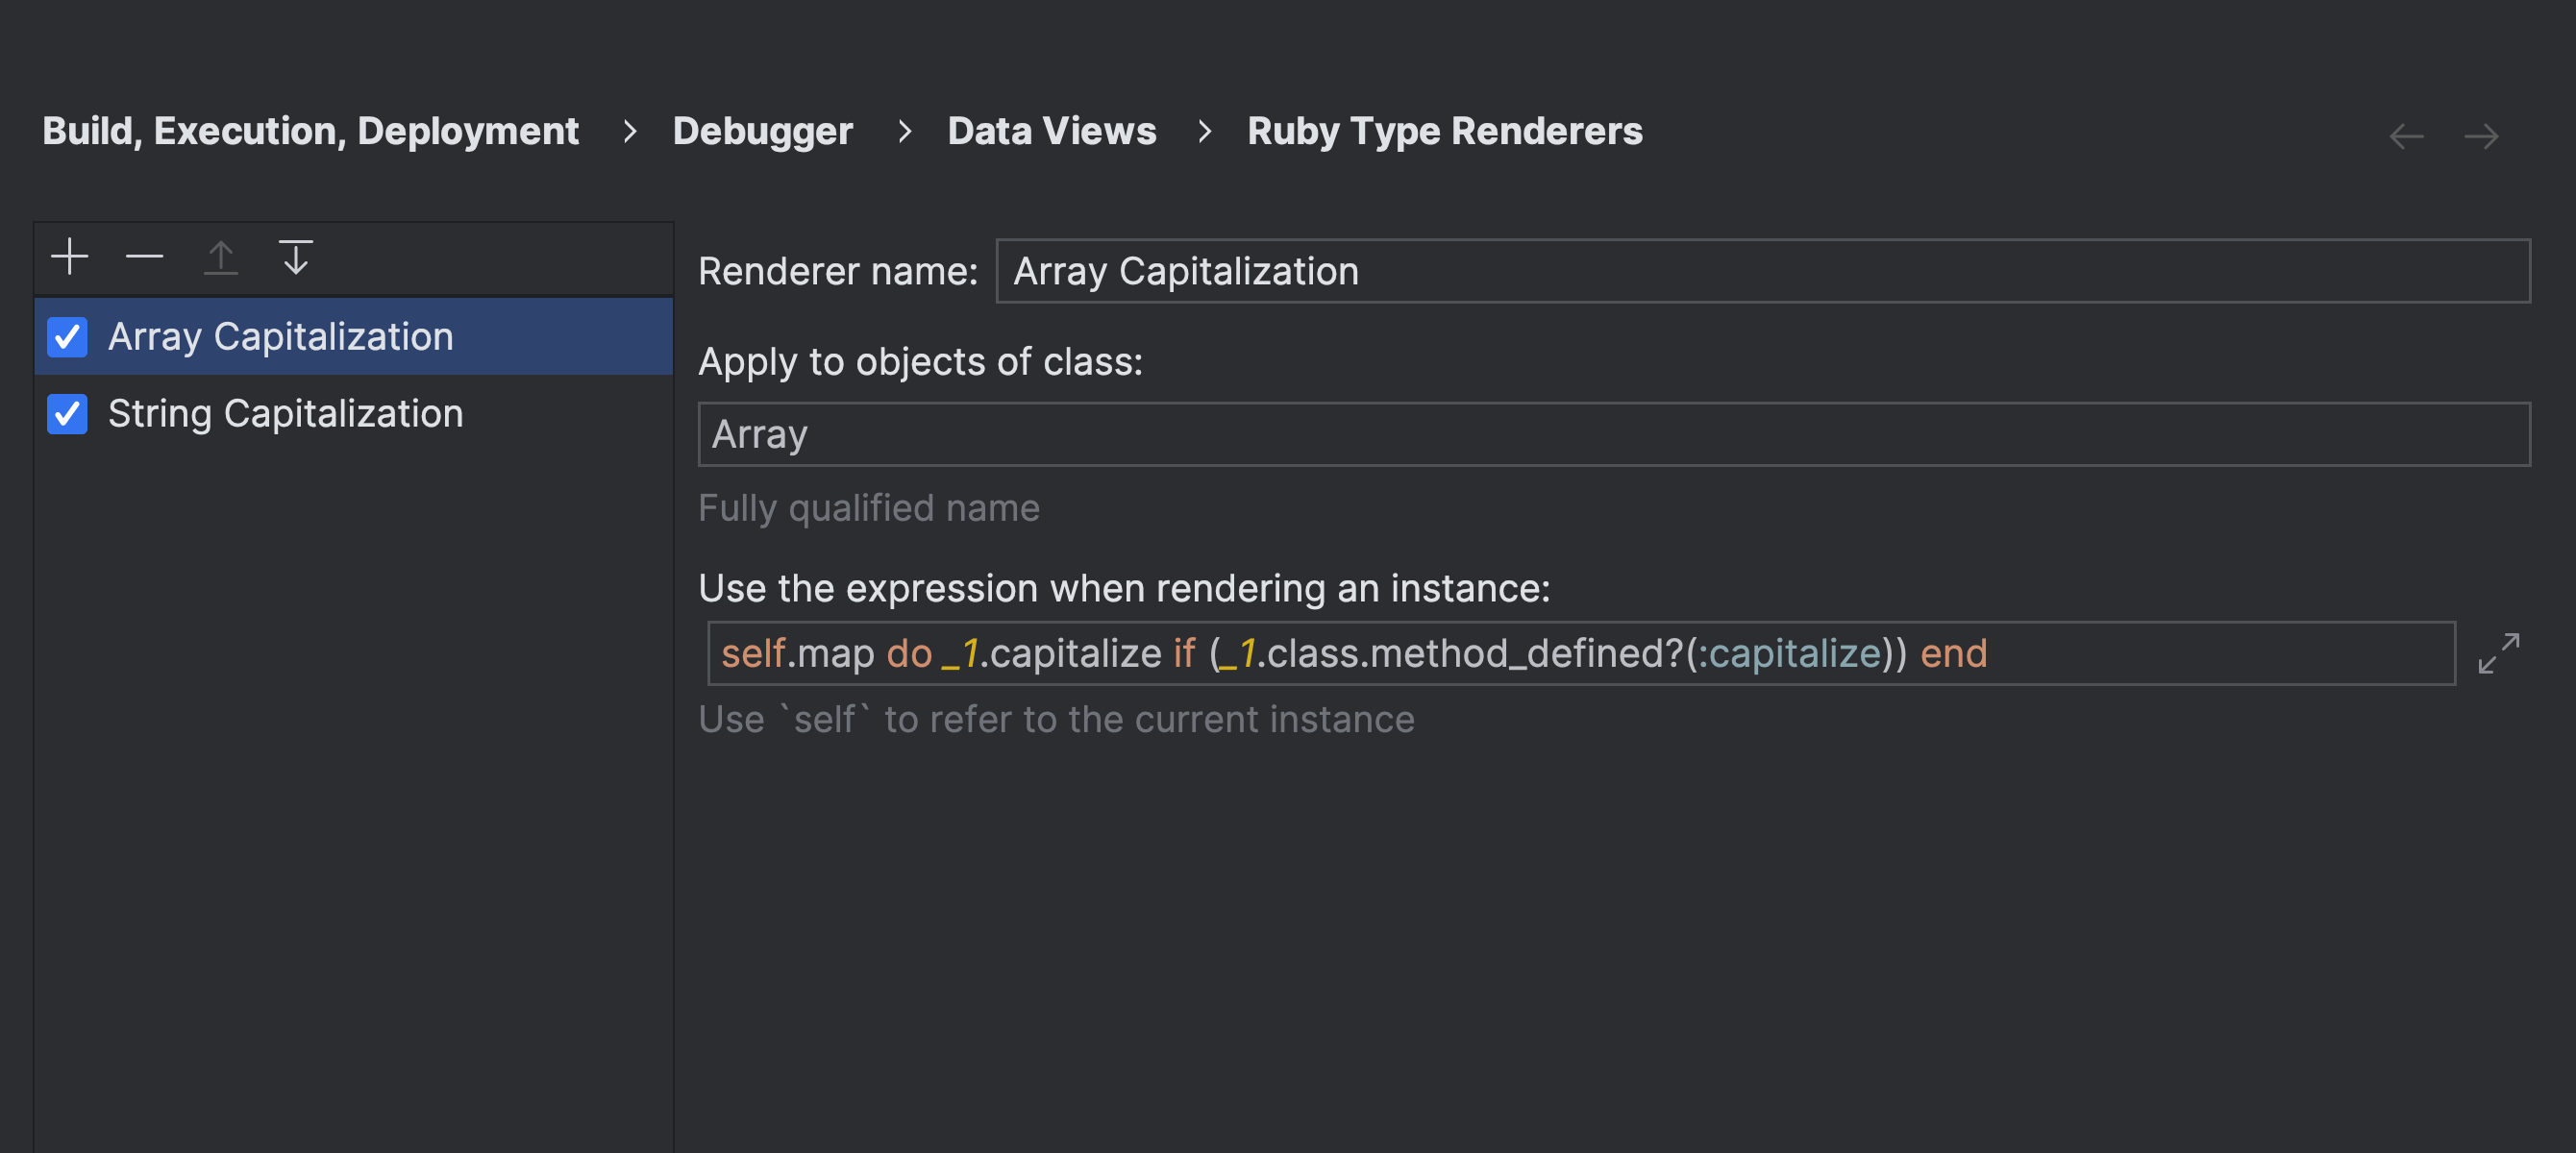 Debugger type renderers